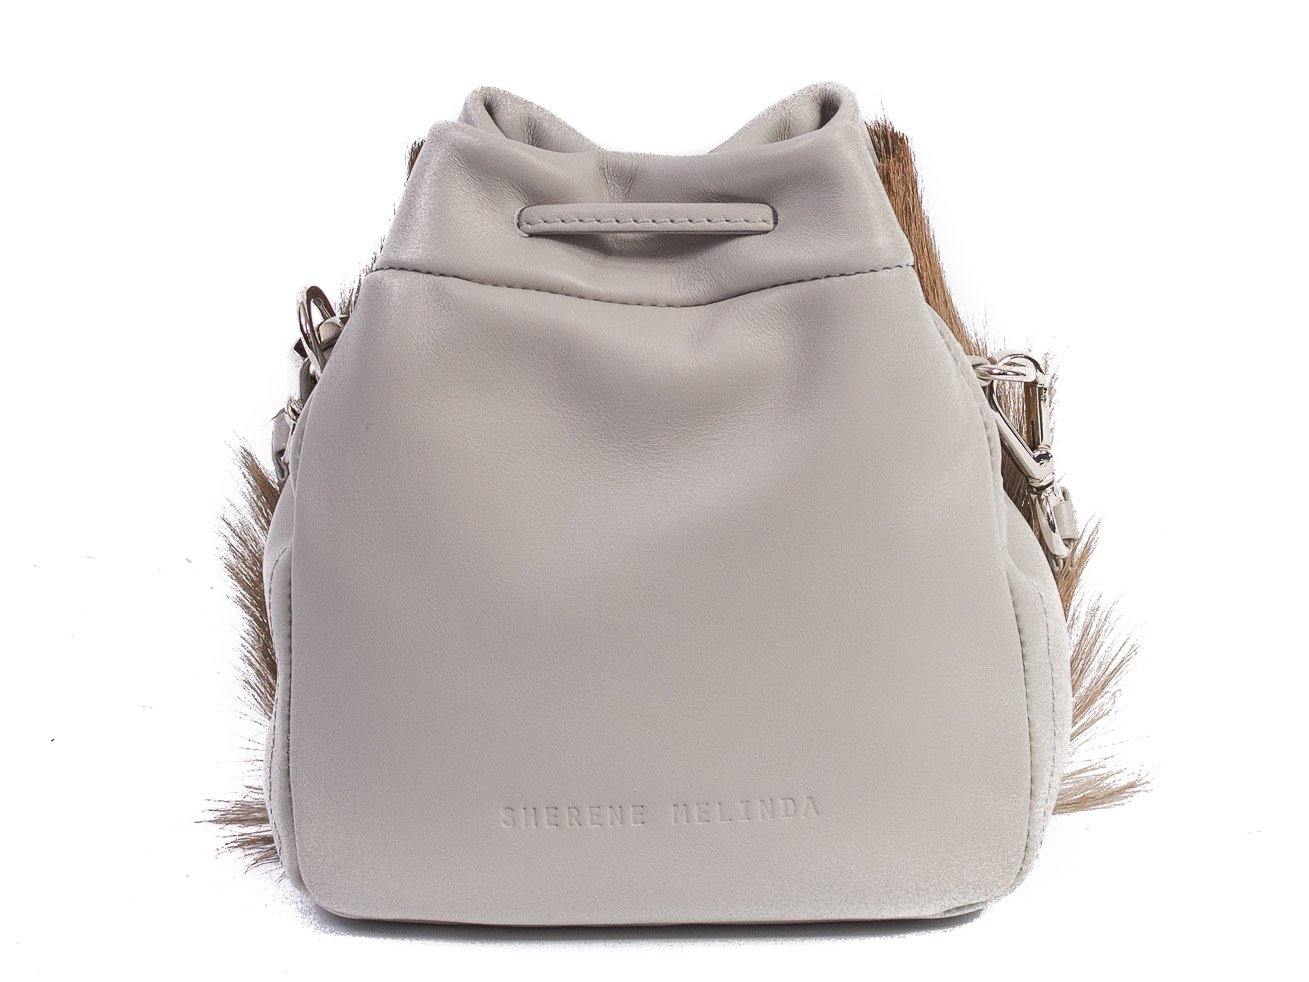 sherene melinda springbok hair-on-hide earth leather pouch bag back